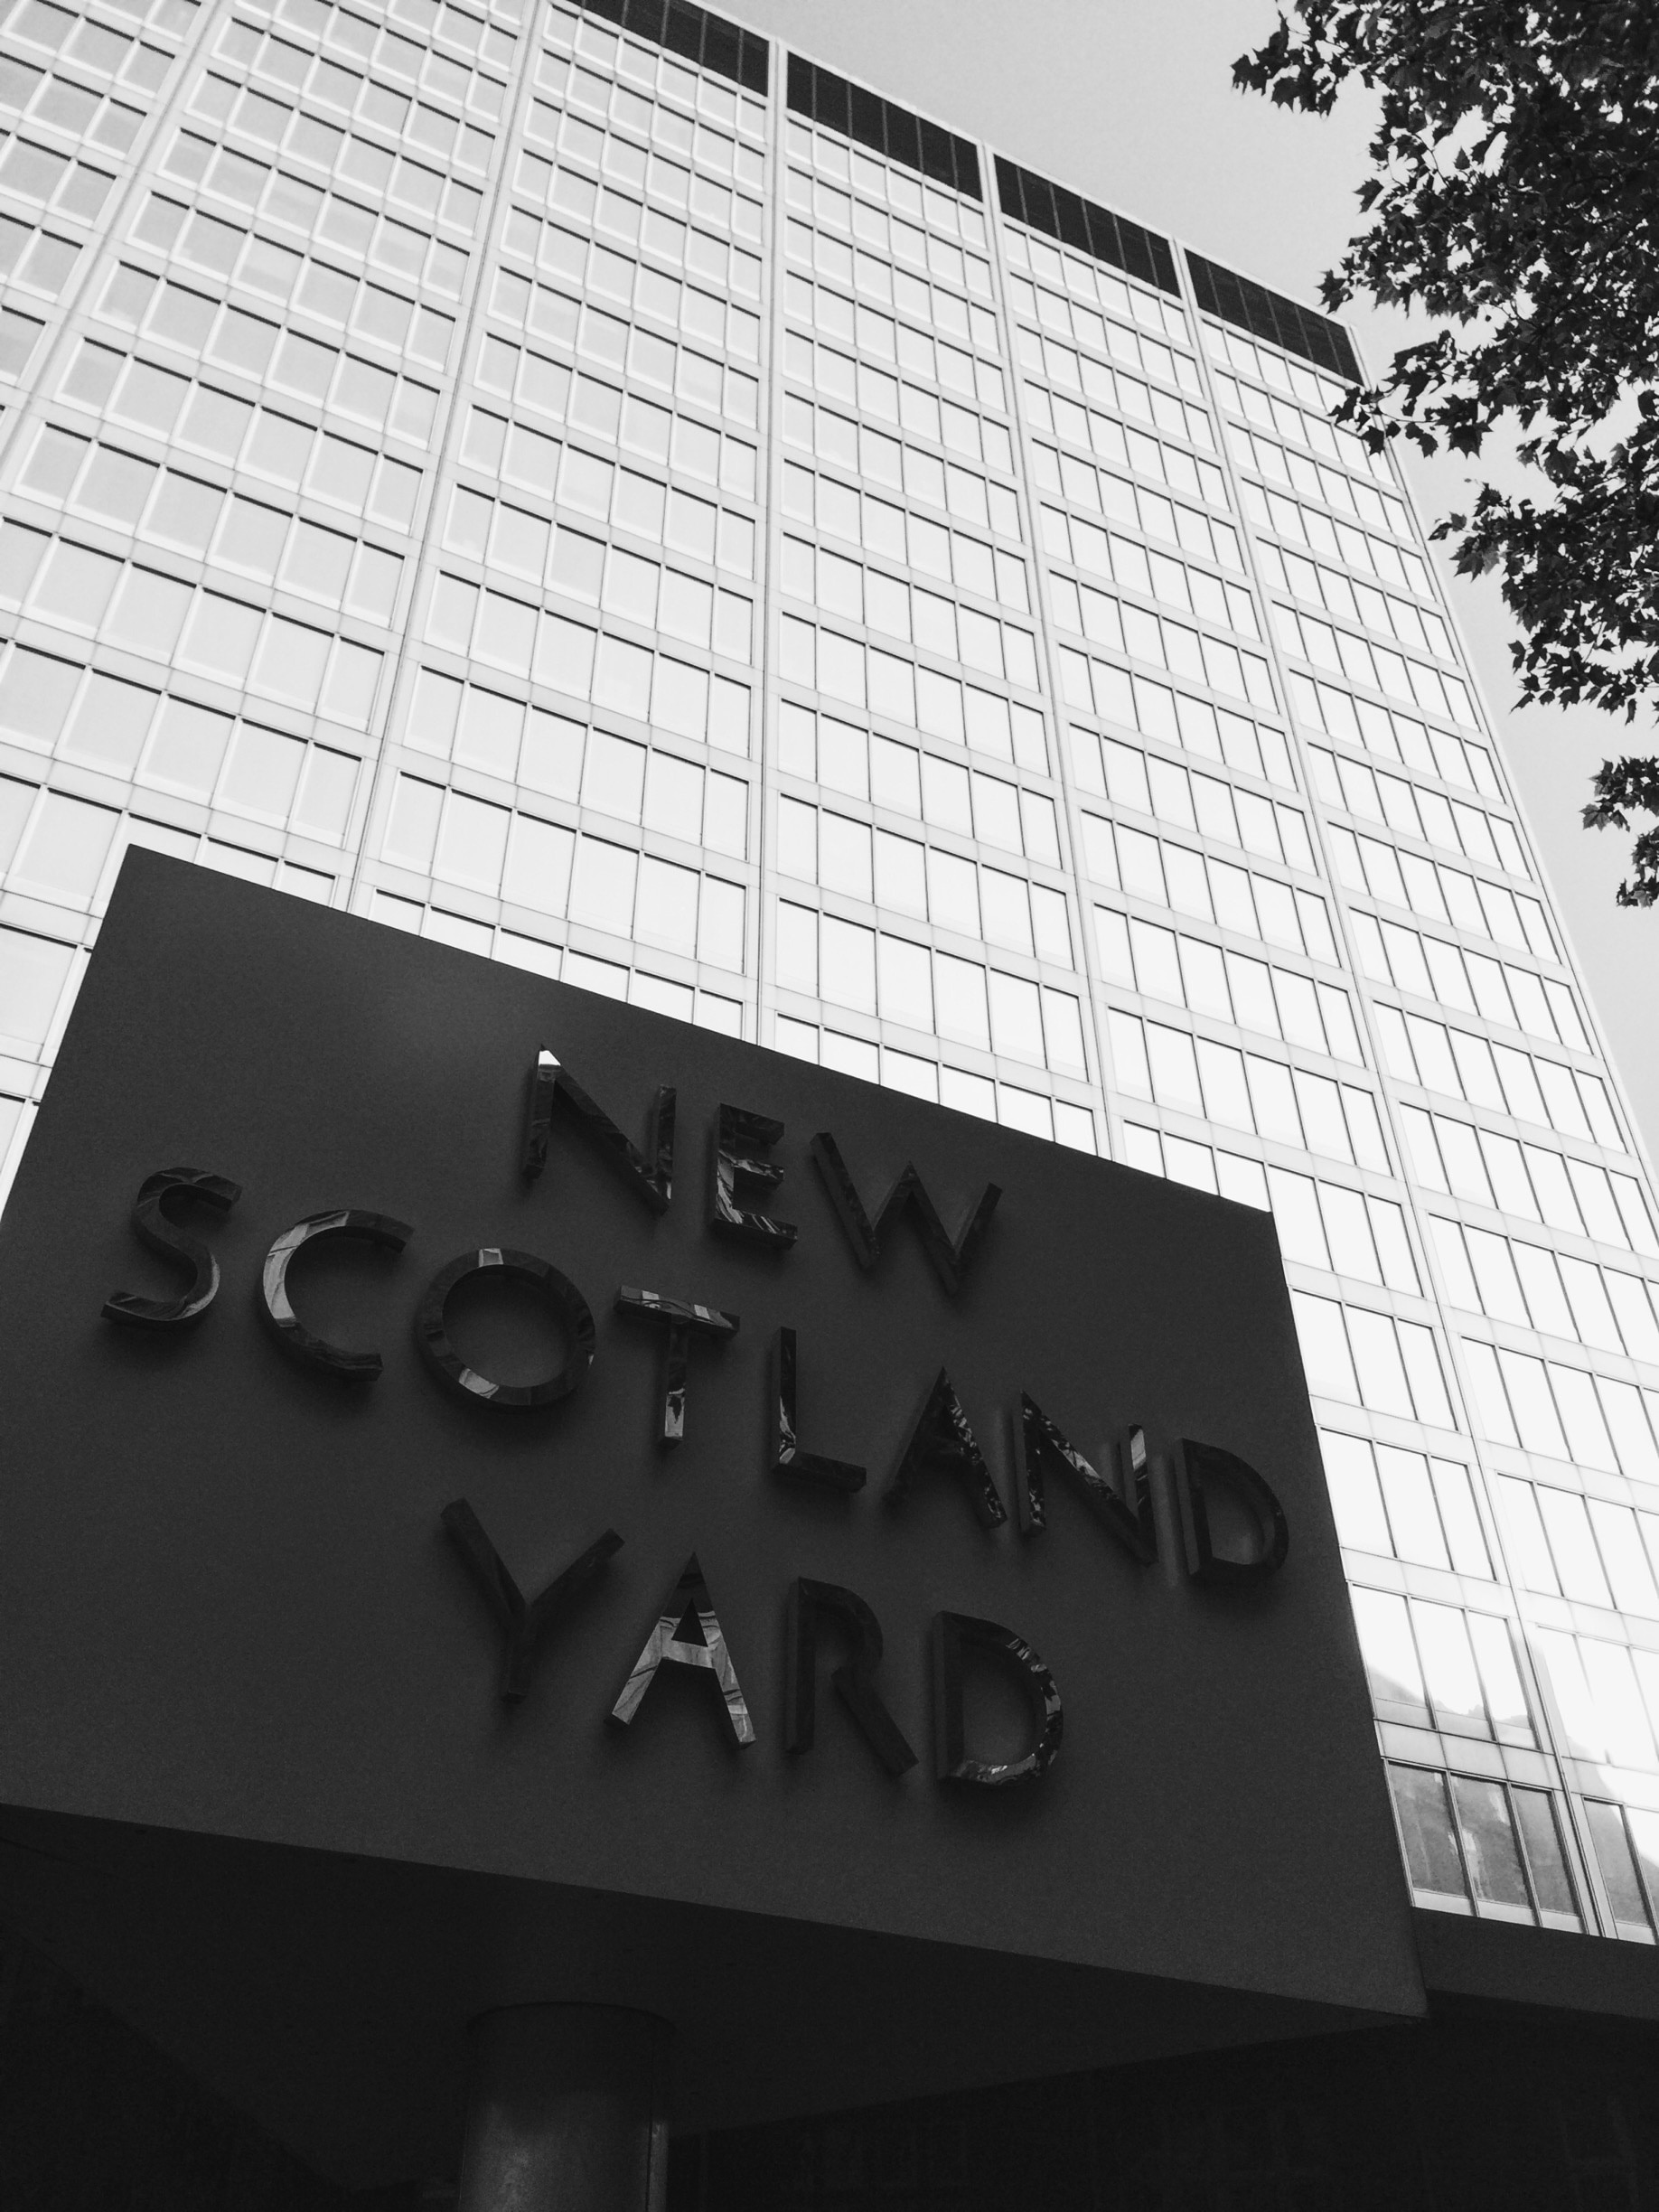 So, where's the Old Scotland Yard? 